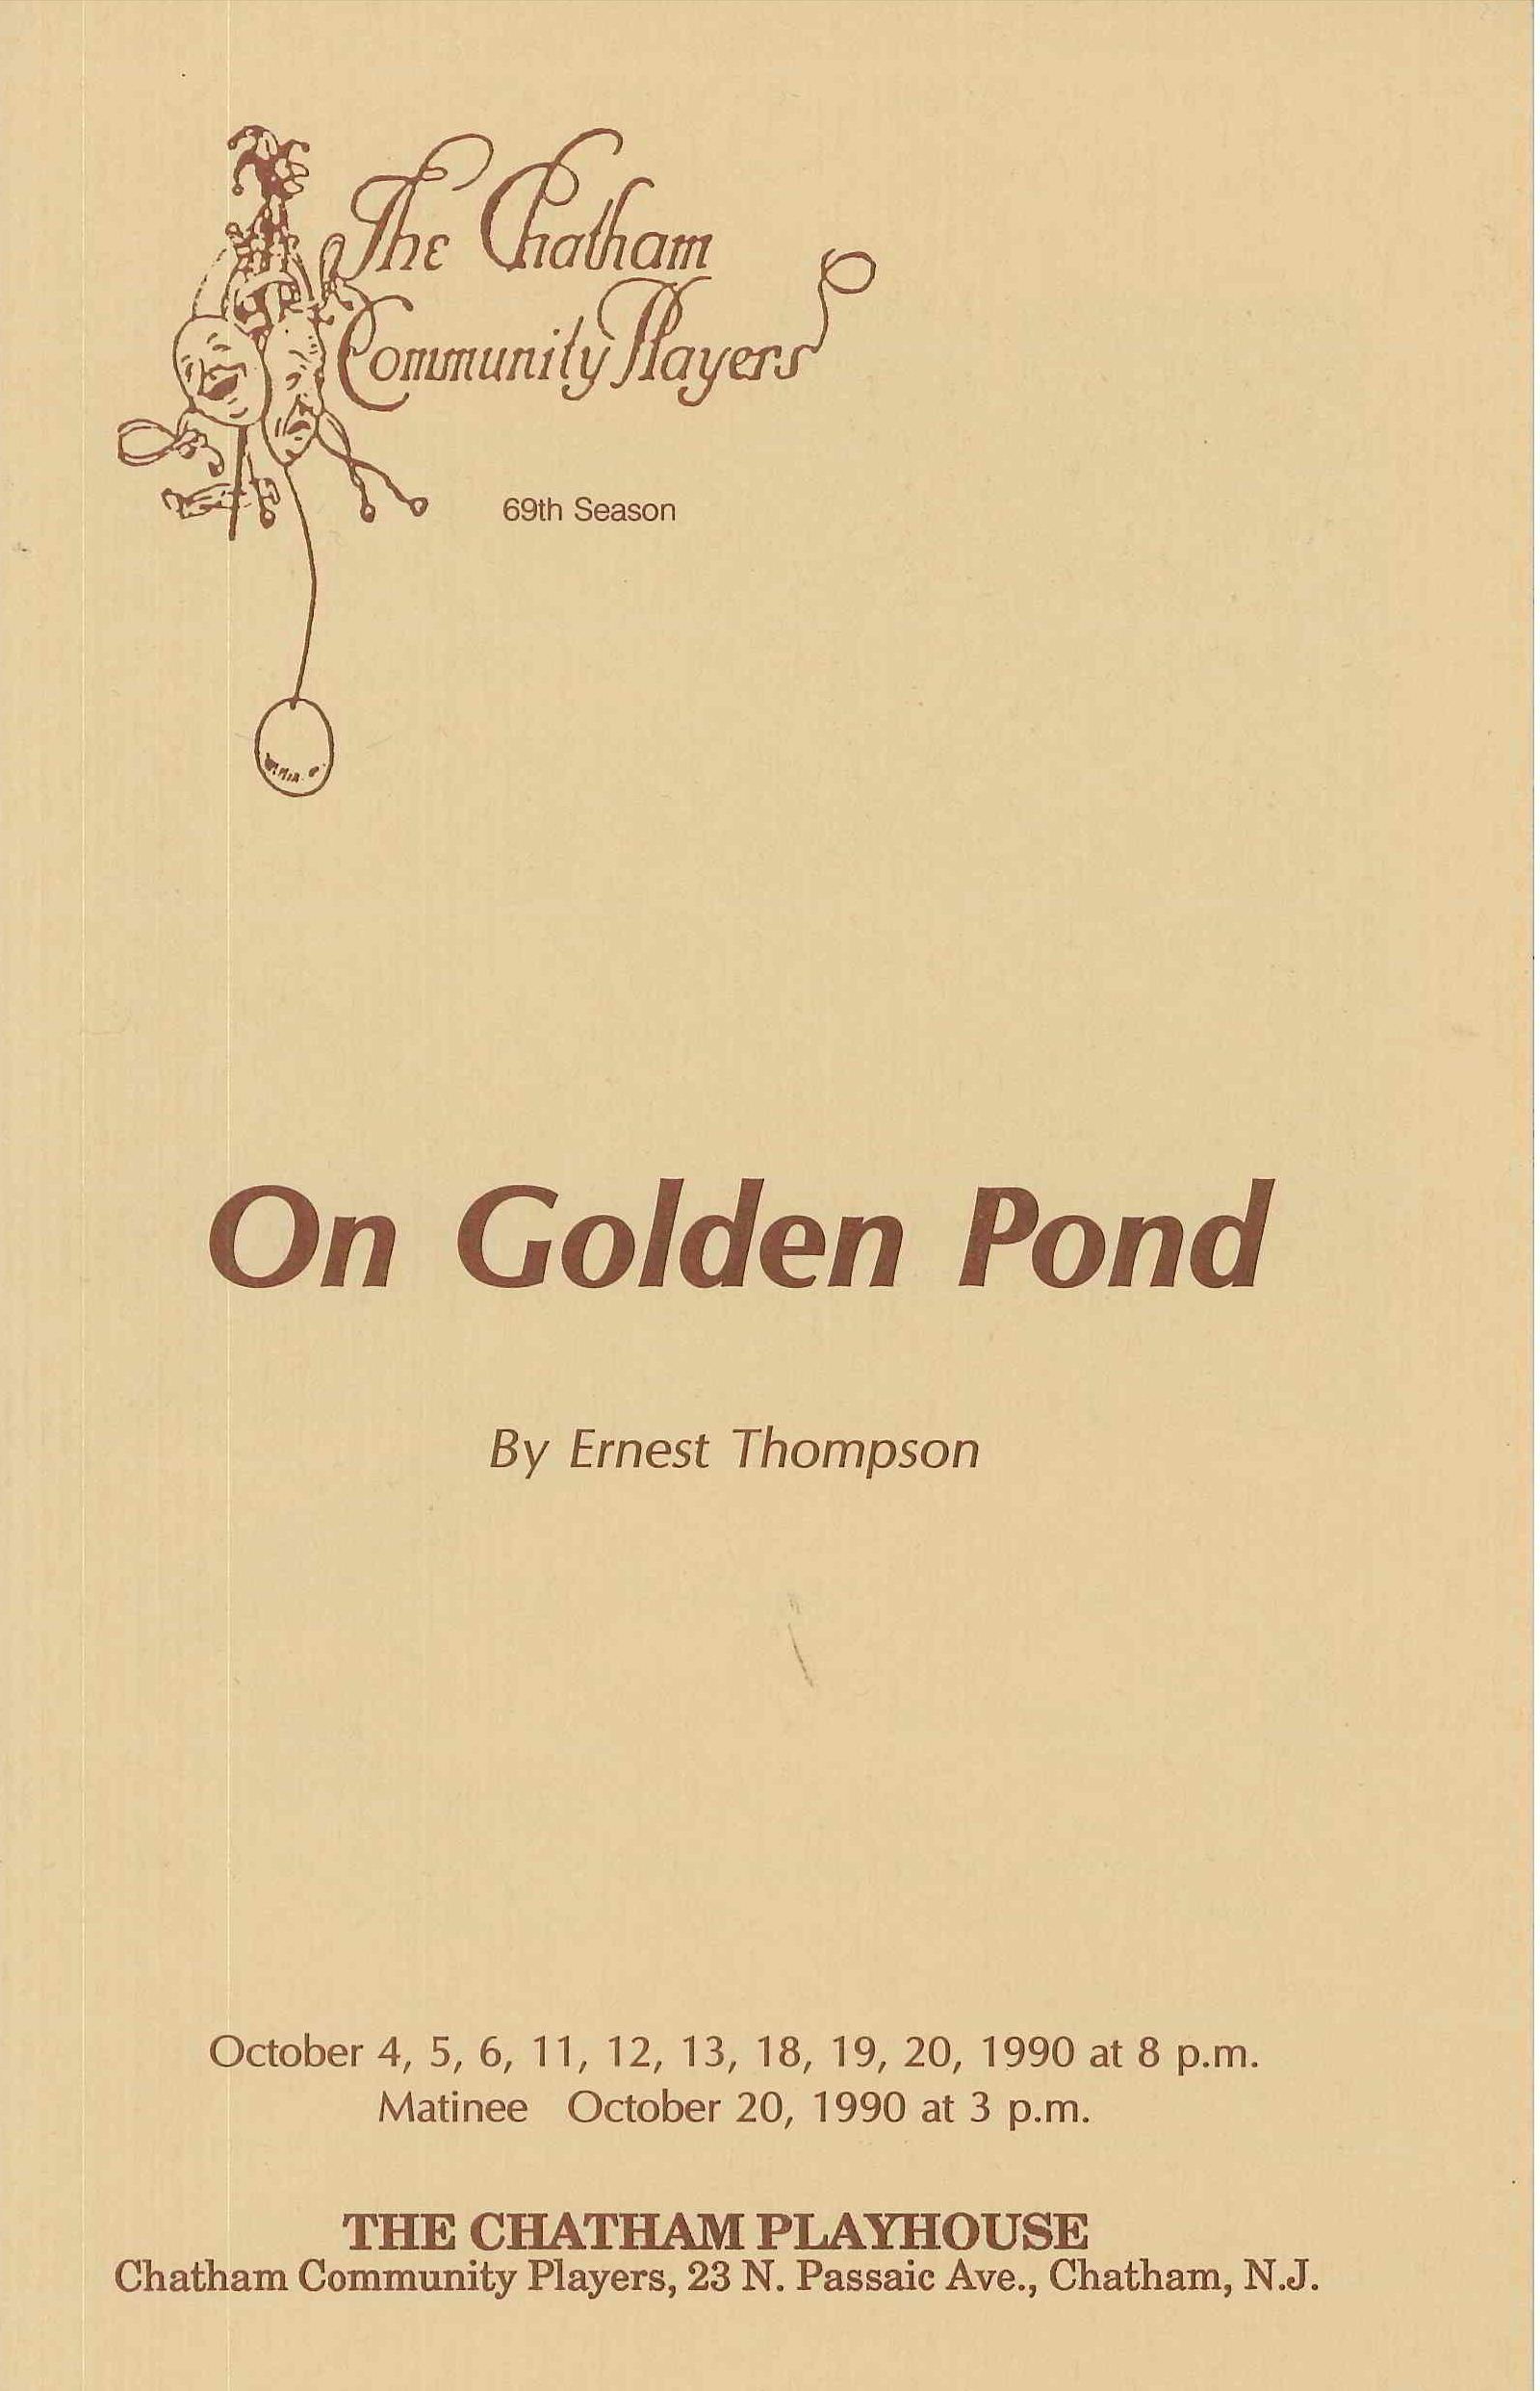 On Golden Pond (1990)